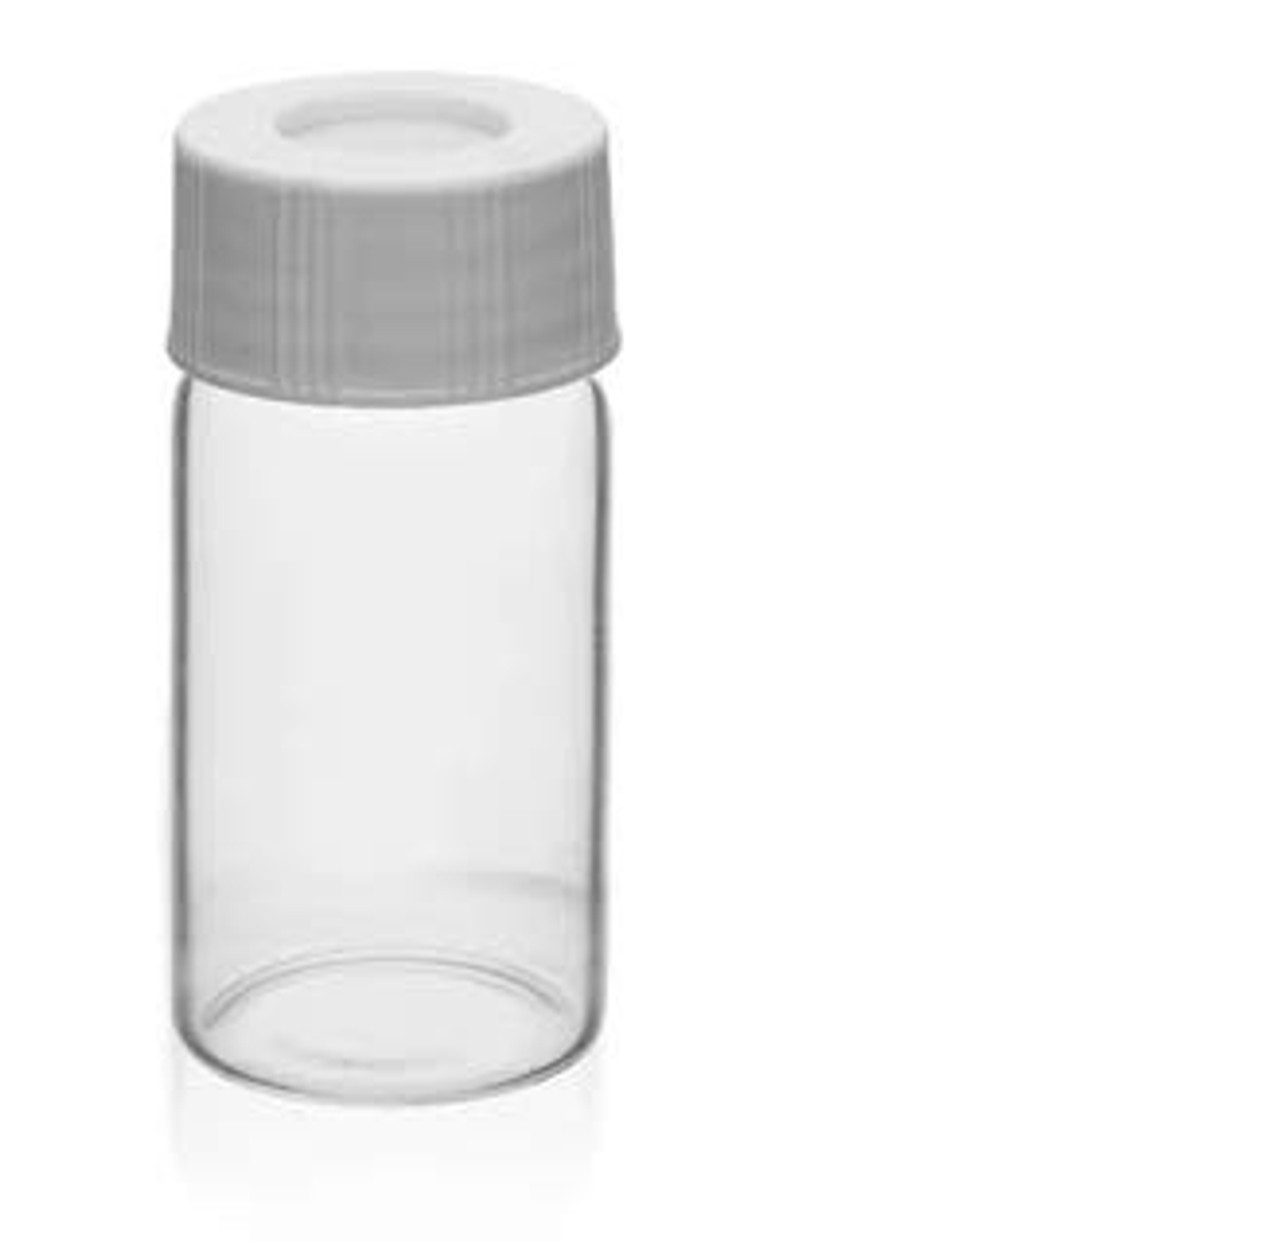 Wide-Mouth Copolymer Plastic Scintillation Vials, 500 per Case